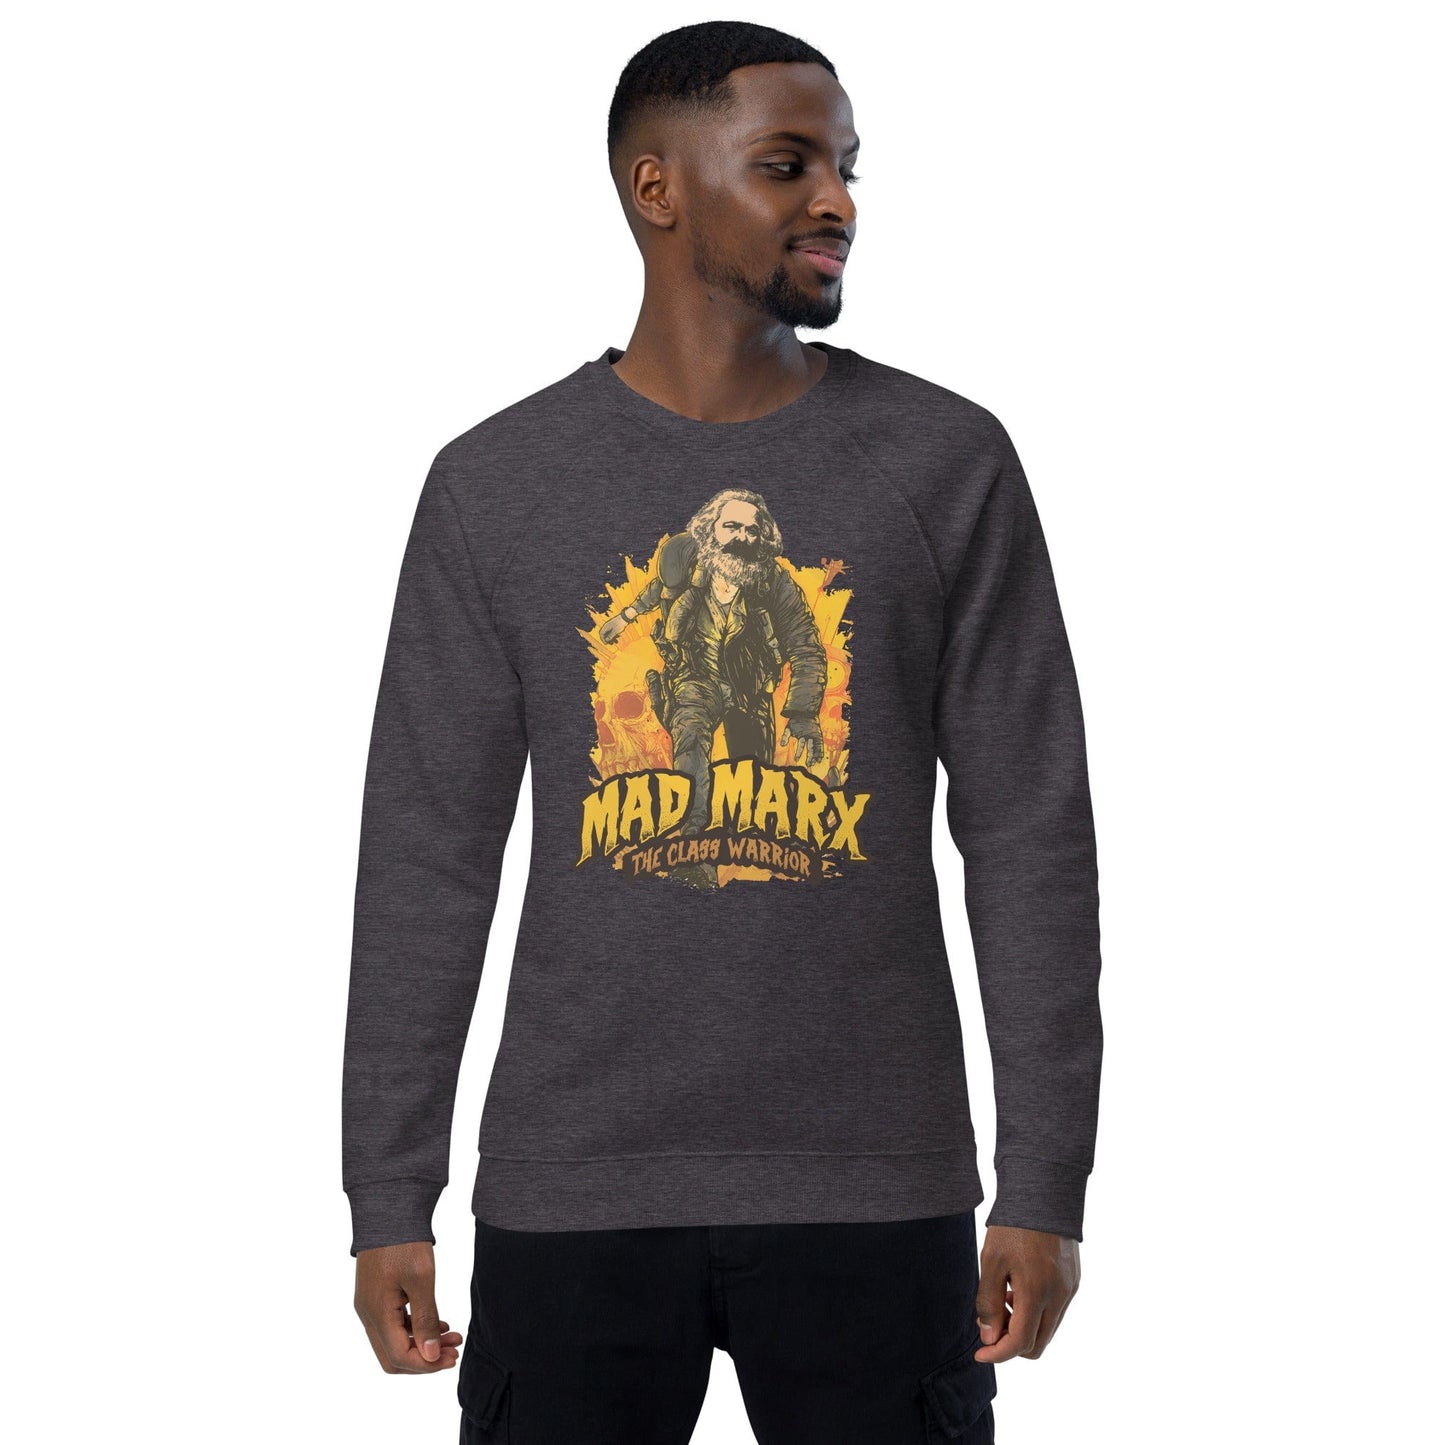 Mad Marx - The Class Warrior - Eco Sweatshirt